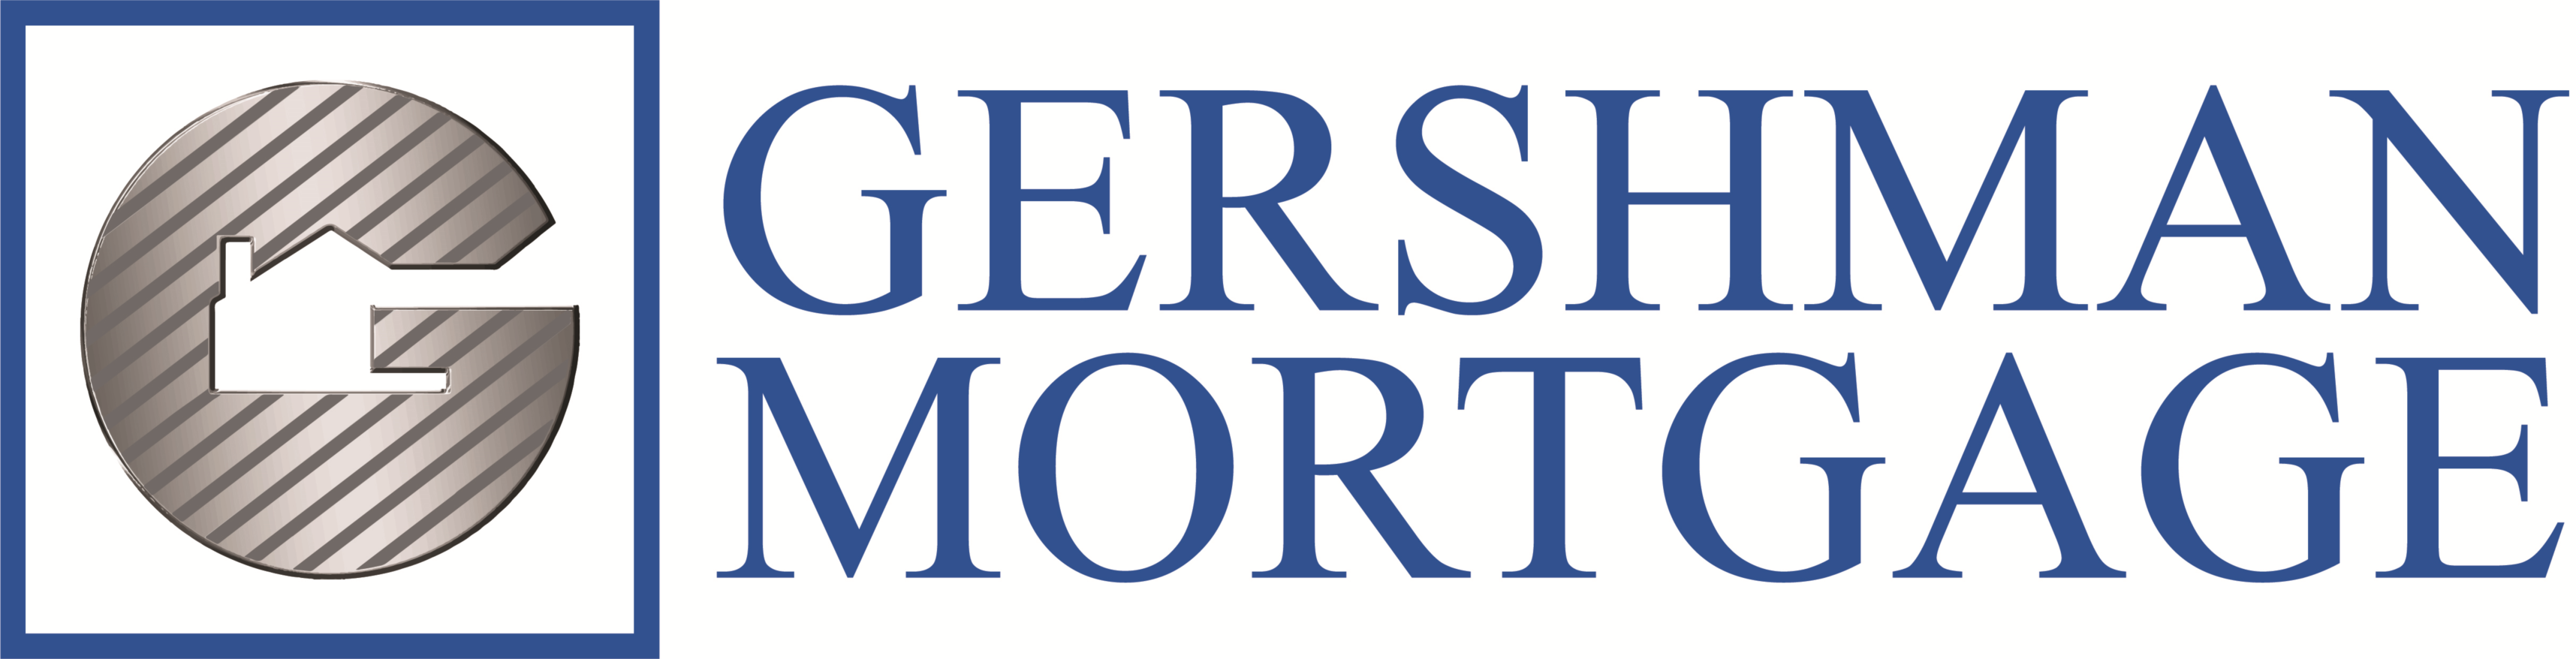 Gershman Mortgage Company Logo